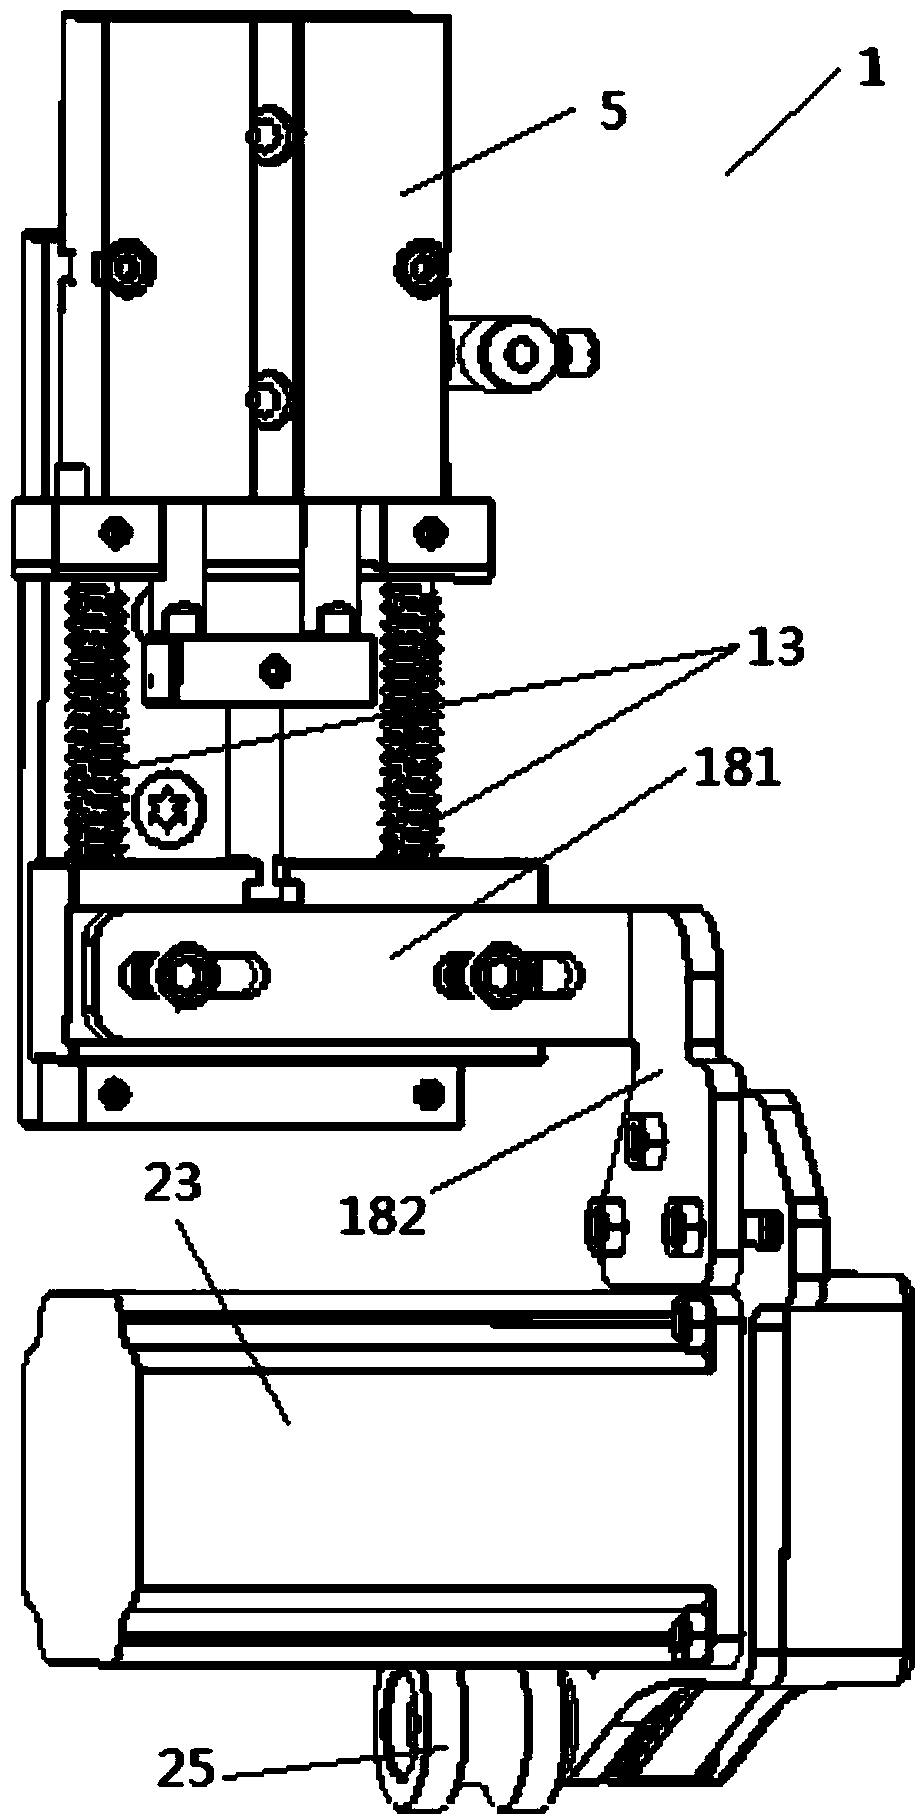 Full-automatic cloth dragging machine